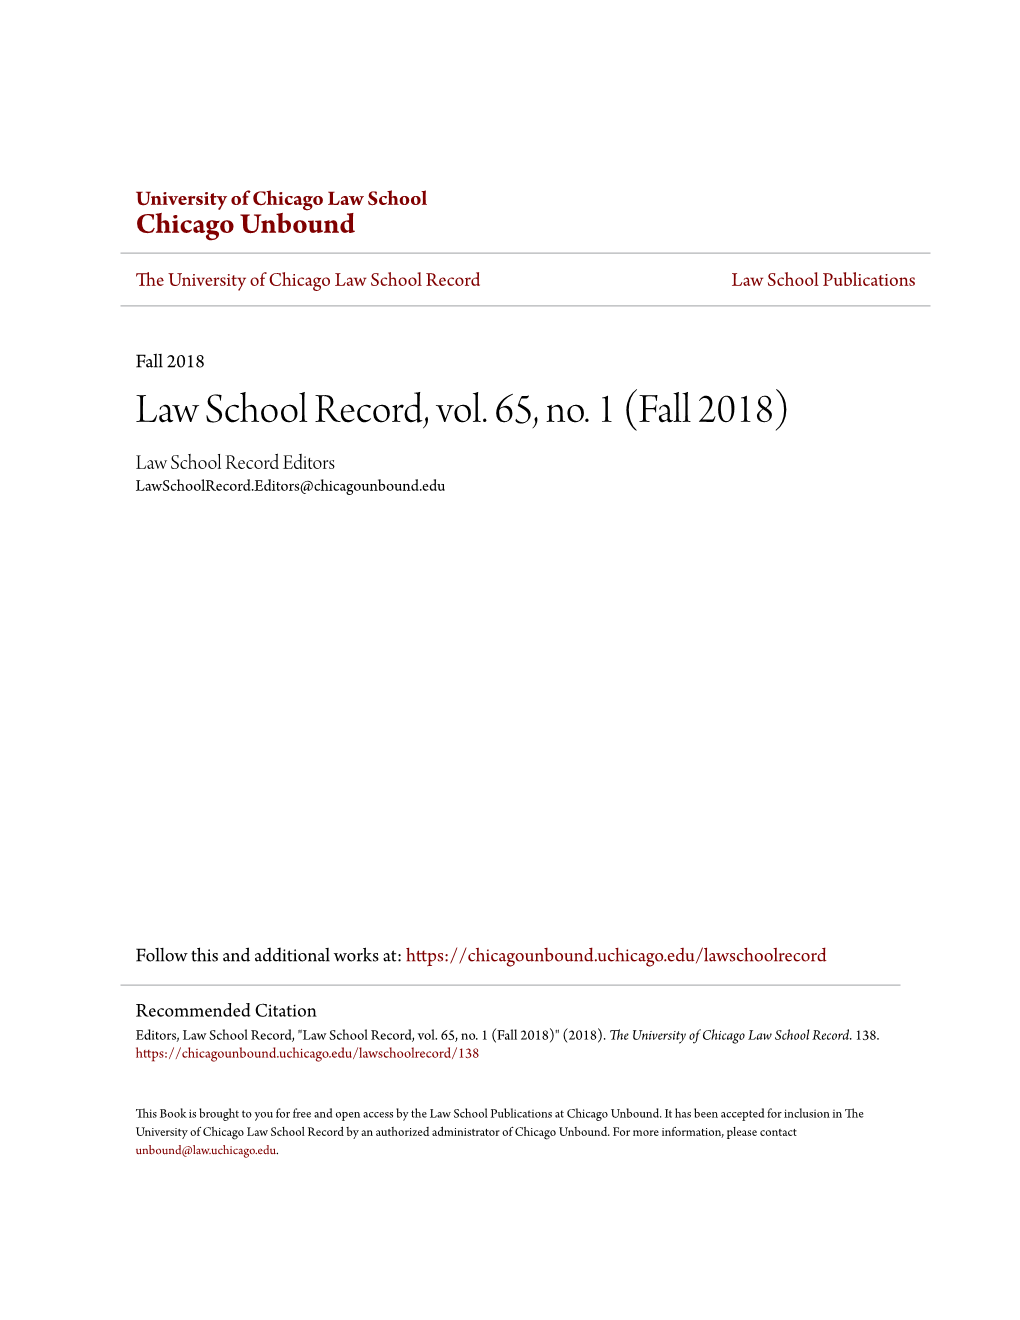 Law School Record, Vol. 65, No. 1 (Fall 2018) Law School Record Editors Lawschoolrecord.Editors@Chicagounbound.Edu